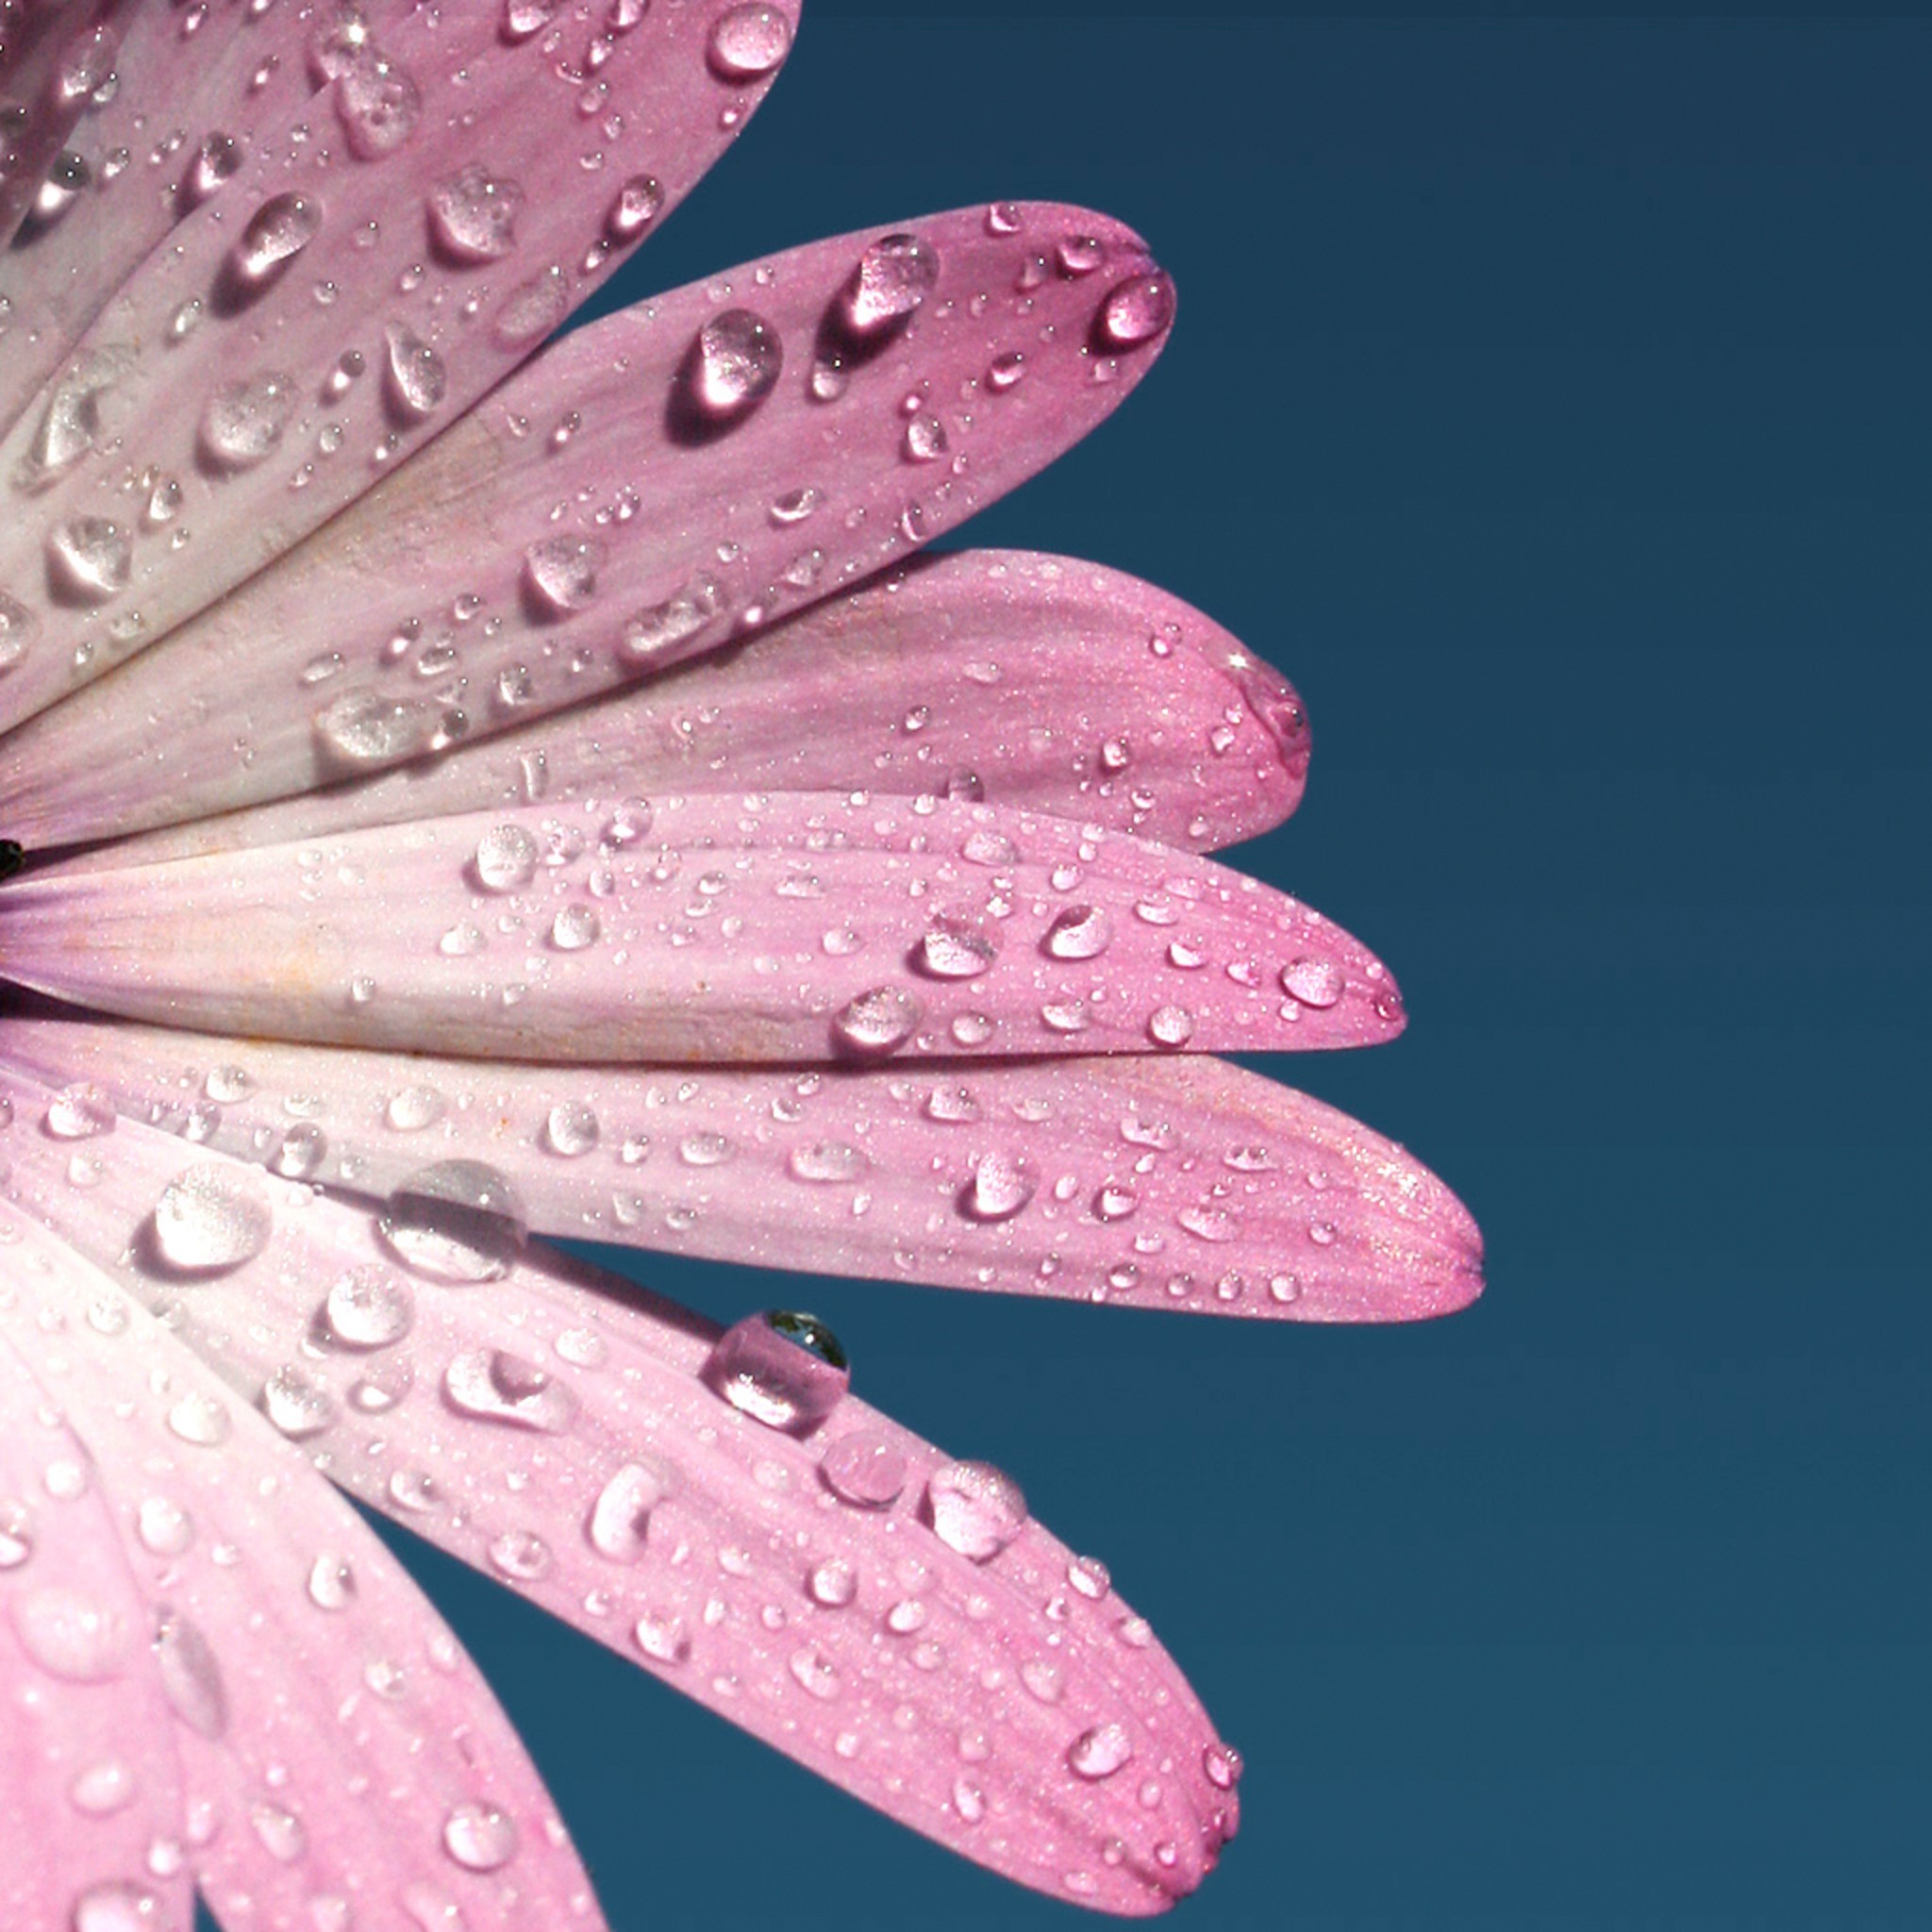 2048x2048 Pink-Daisy-Flower-Petal-Dew-Macro-ipad-air-wallpaper-ilikewallpaper_com